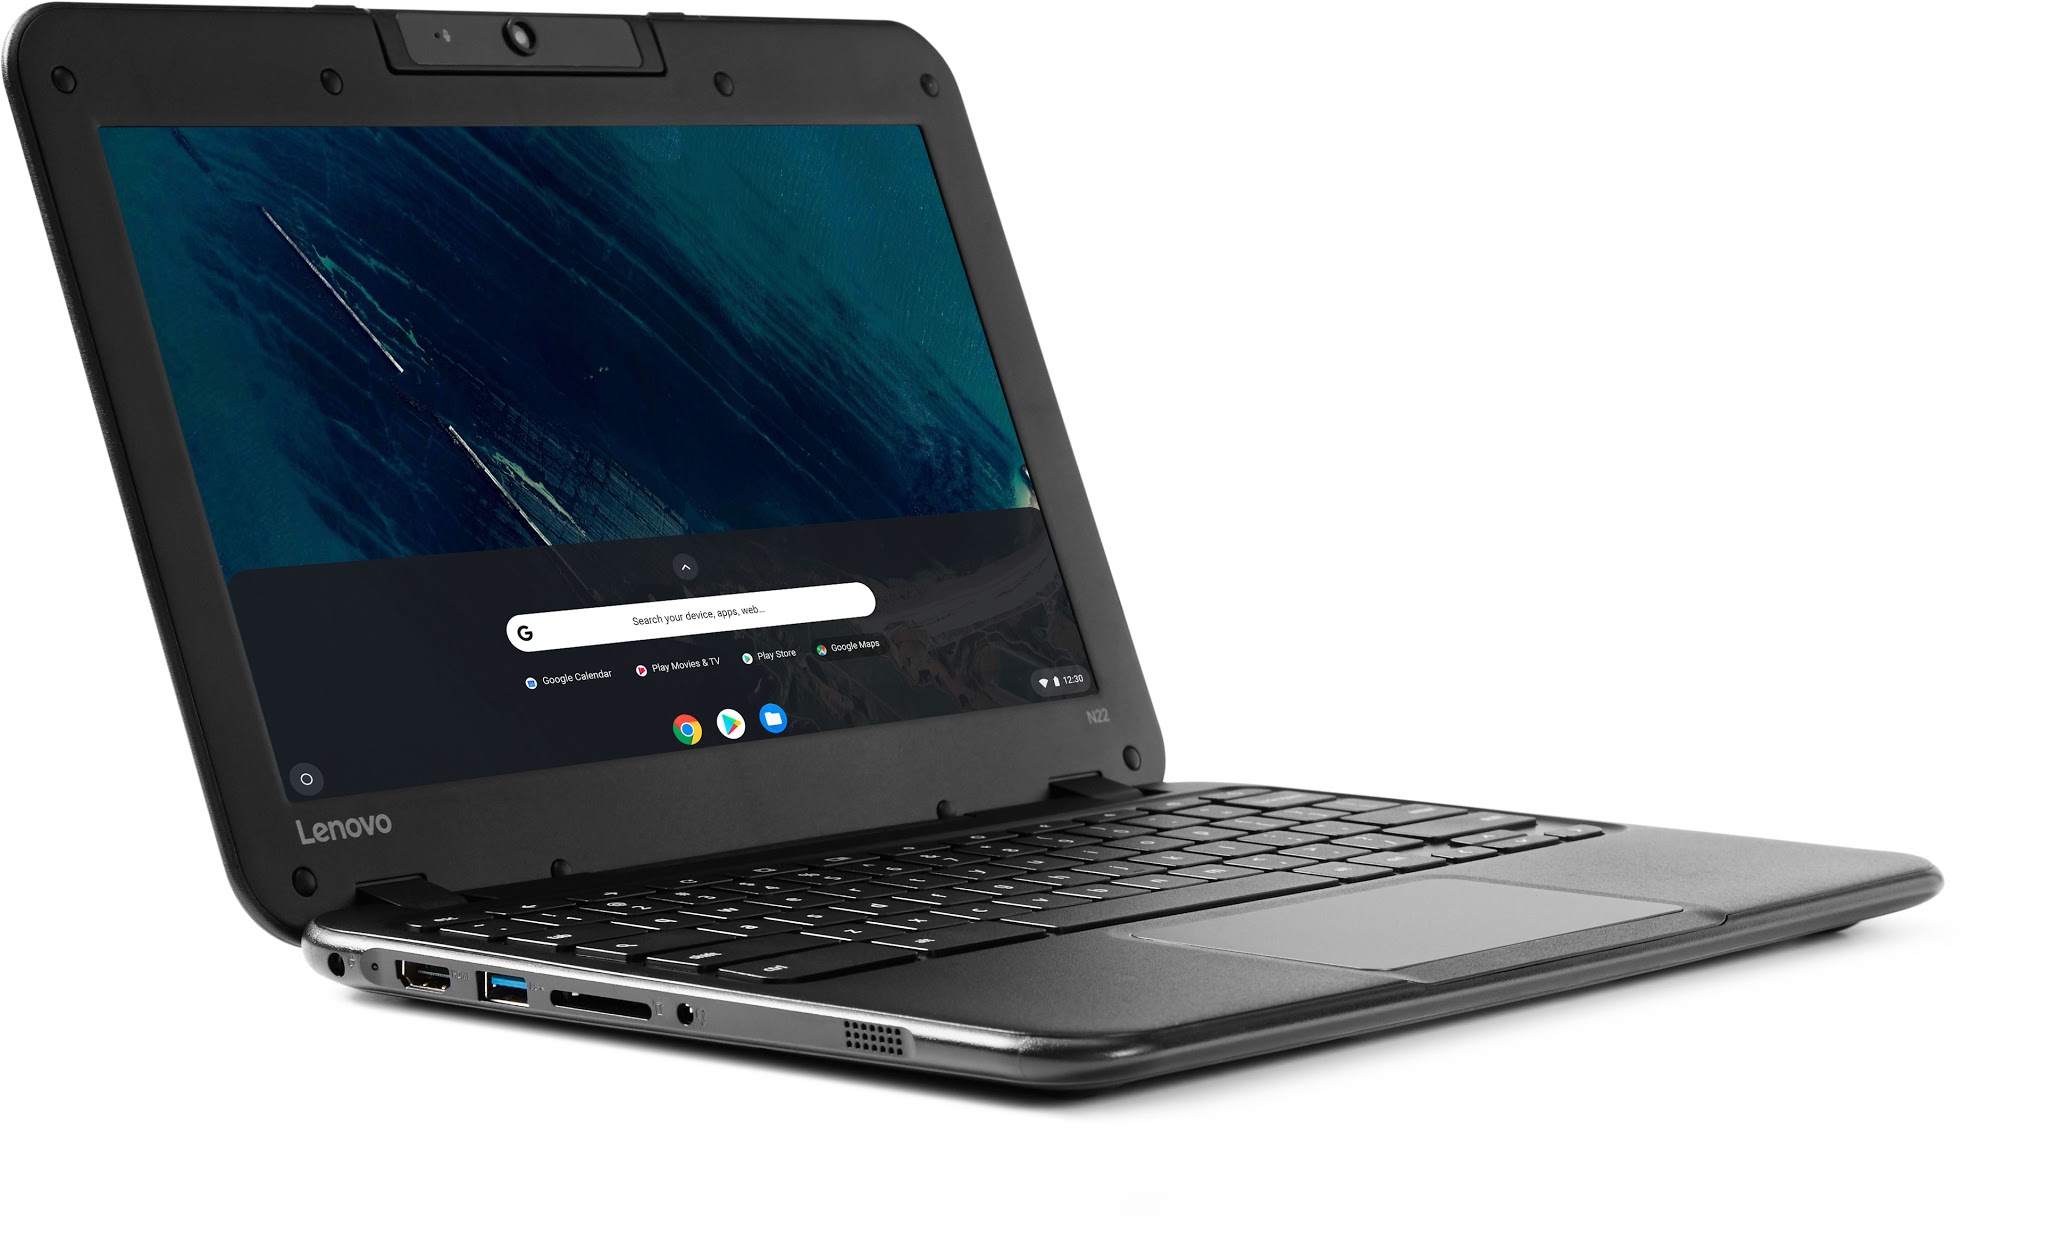 Lenovo N22 Chromebook 11.6" Laptop, Intel Celeron, 2GB RAM, 16GB SSD, Chrome OS, Black (USED) - image 2 of 4